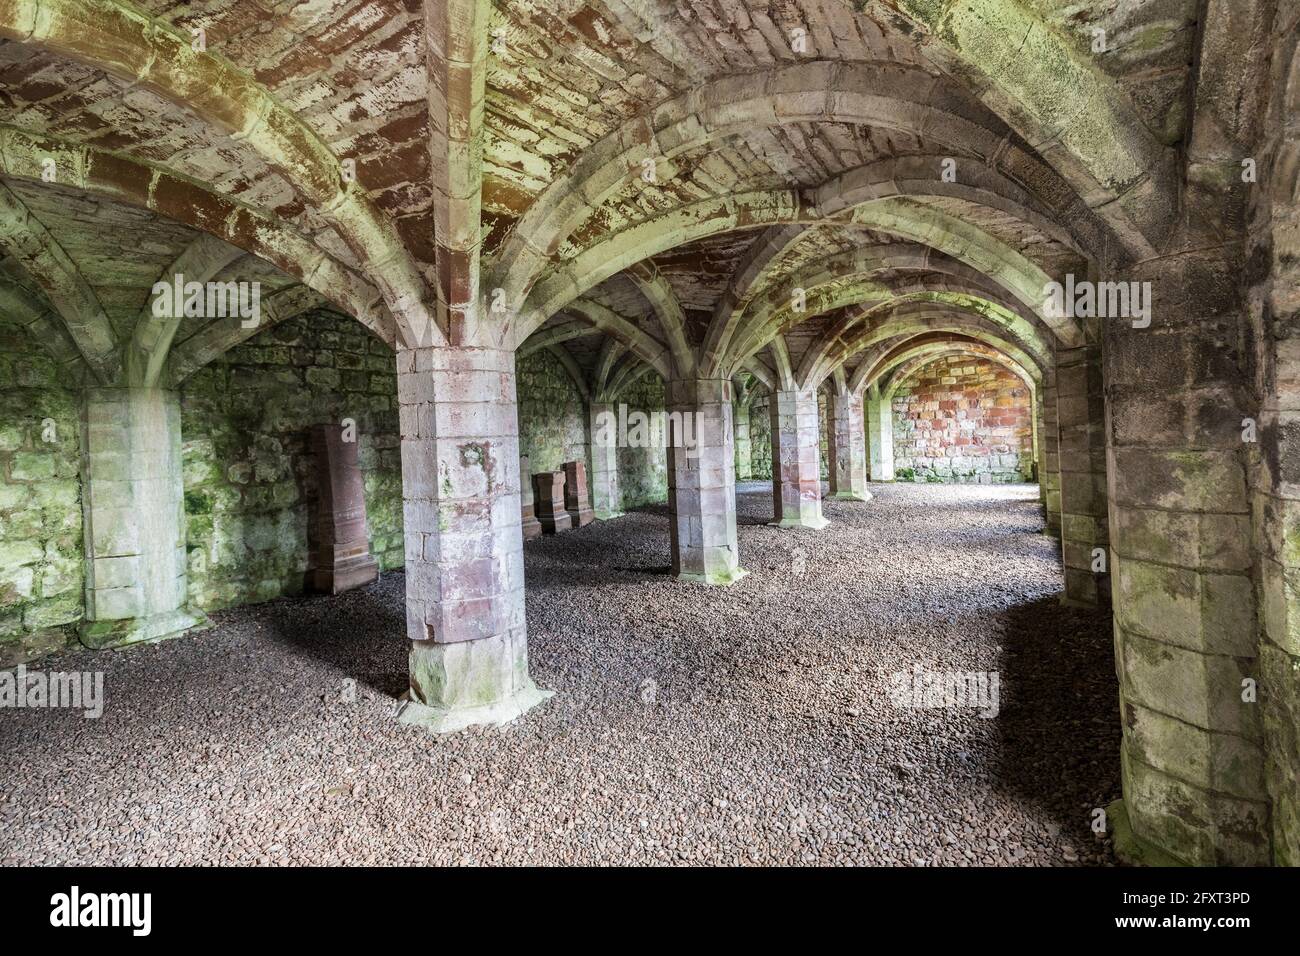 Undercroft of cloisters, Lanercost Priory, Cumbria, England, UK Stock Photo